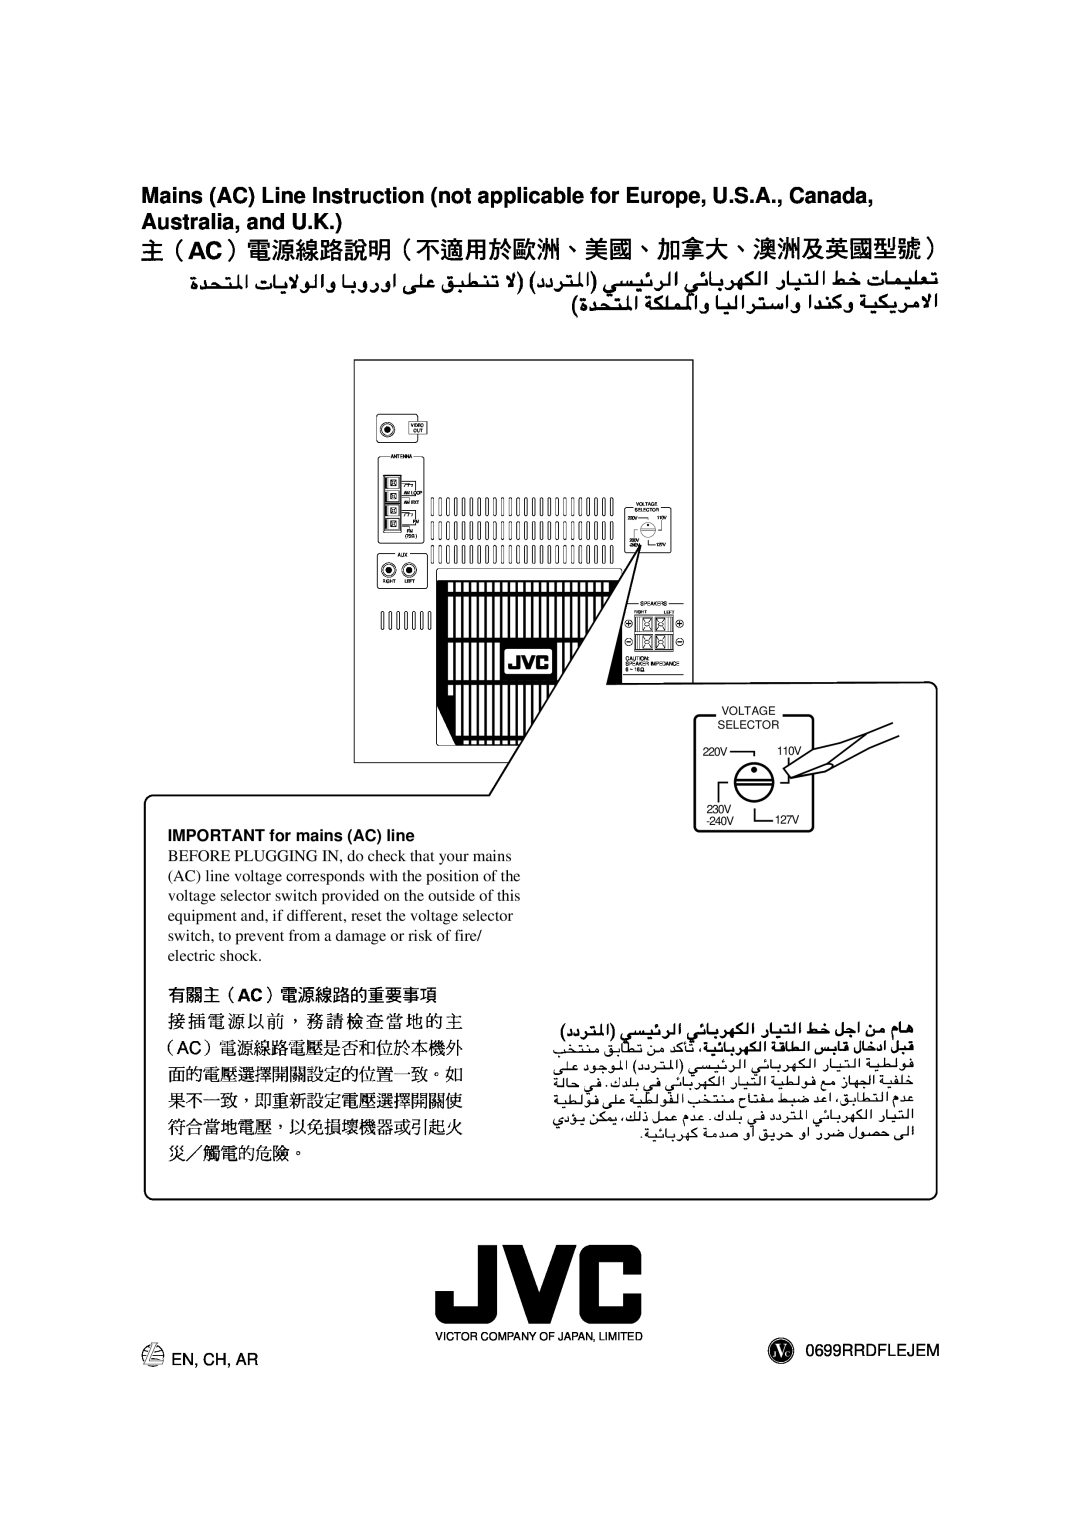 JVC MX-J333VU manual IMPORTANT for mains AC line, En, Ch, Ar, JVC 0699RRDFLEJEM 